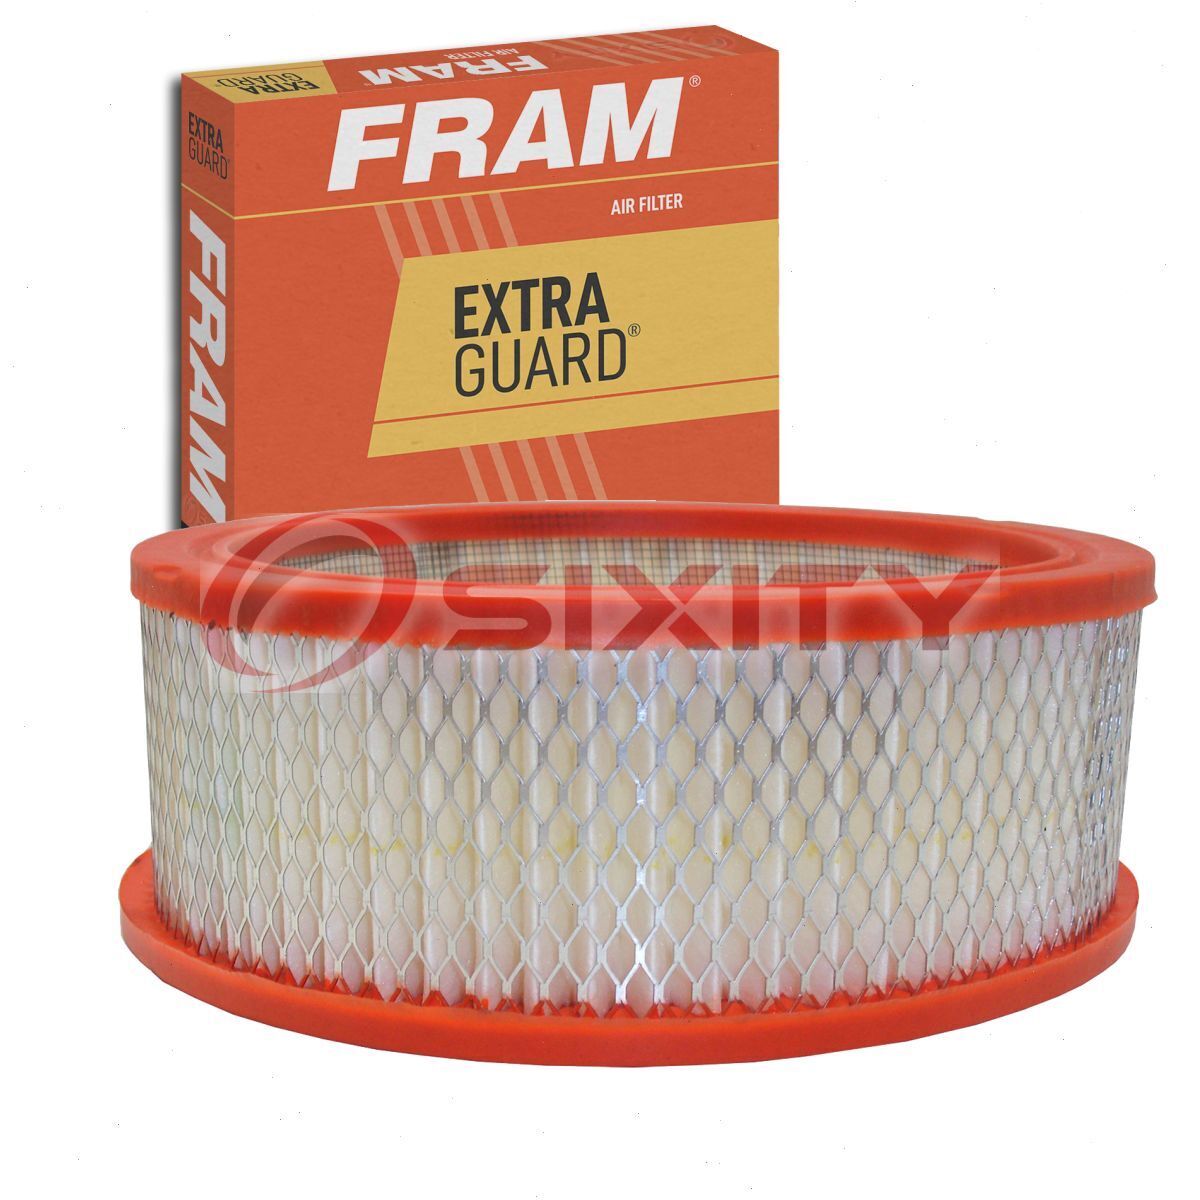 FRAM Extra Guard Air Filter for 1980 Chrysler Cordoba Intake Inlet Manifold tz